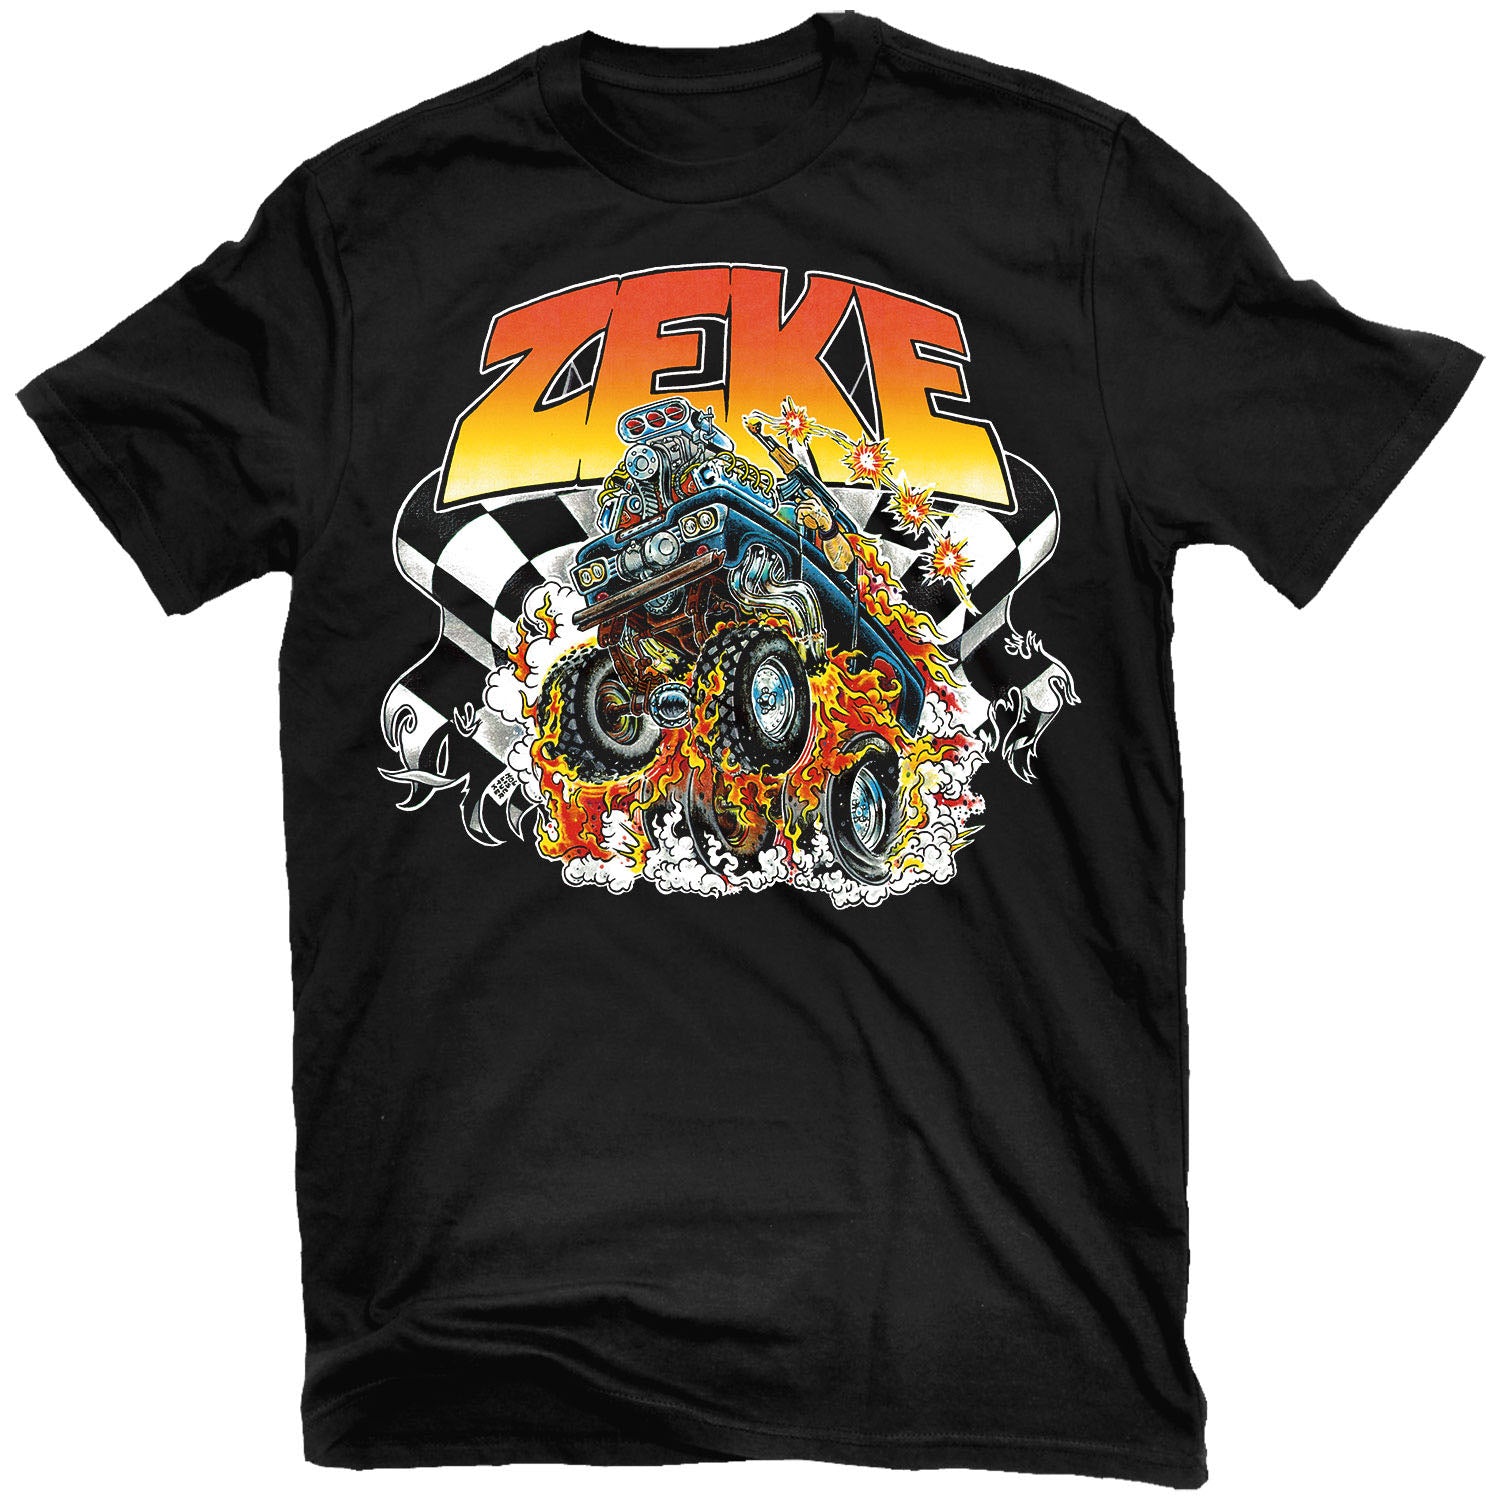 Zeke "Hellbender" T-Shirt